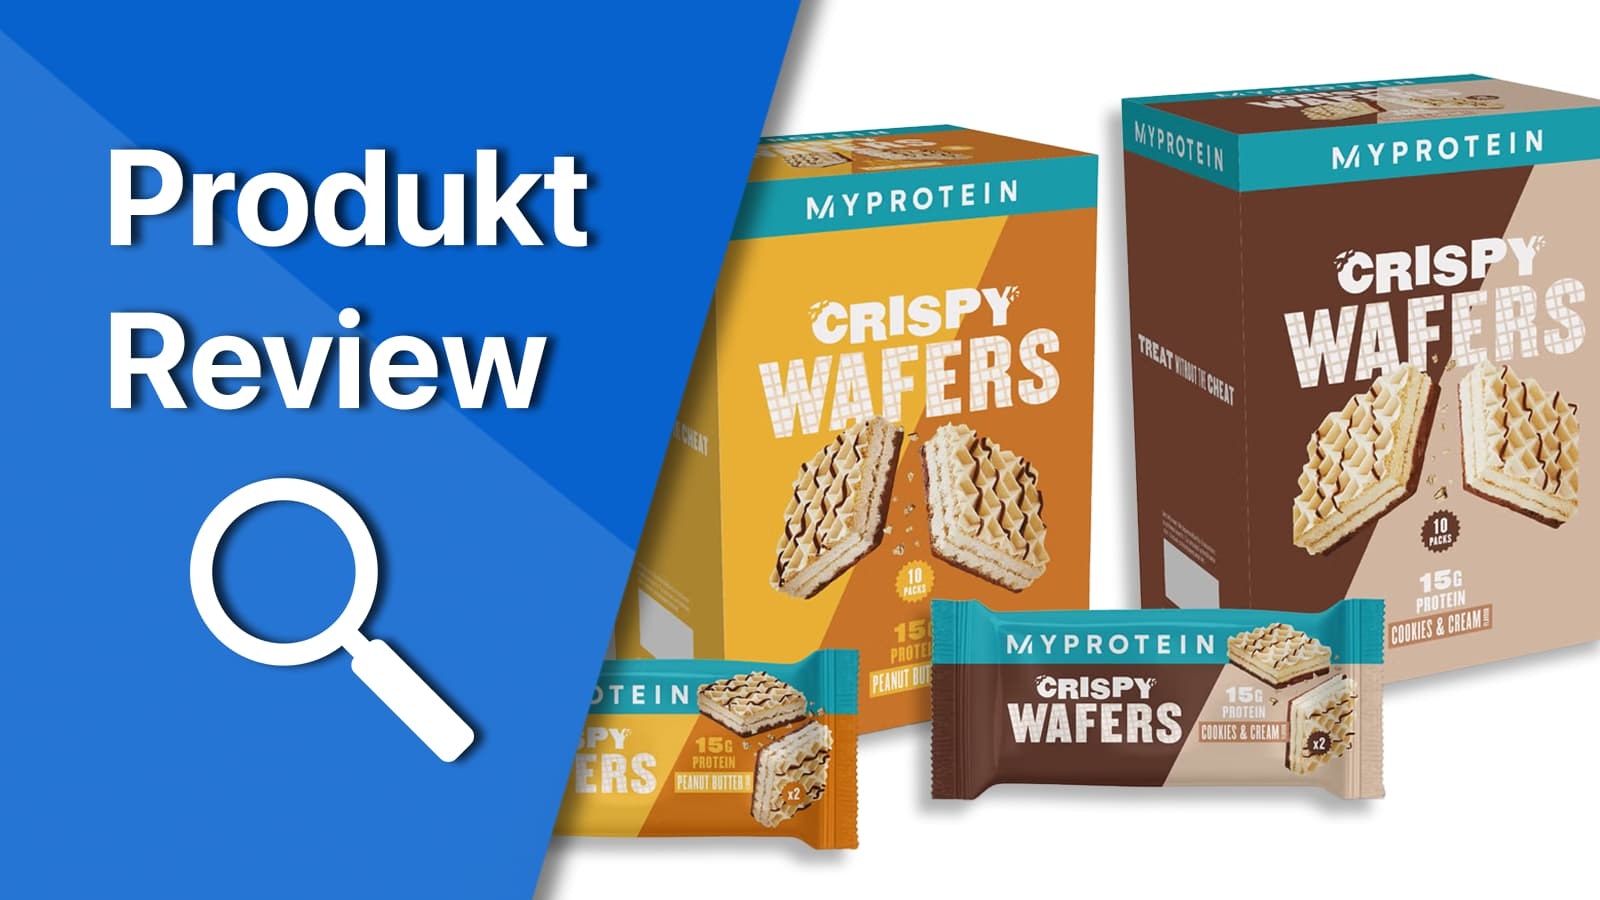 MyProtein Crispy Wafers Produkt Review. Vorschau der Verpackungen der Myprotein Crispy Wafers.